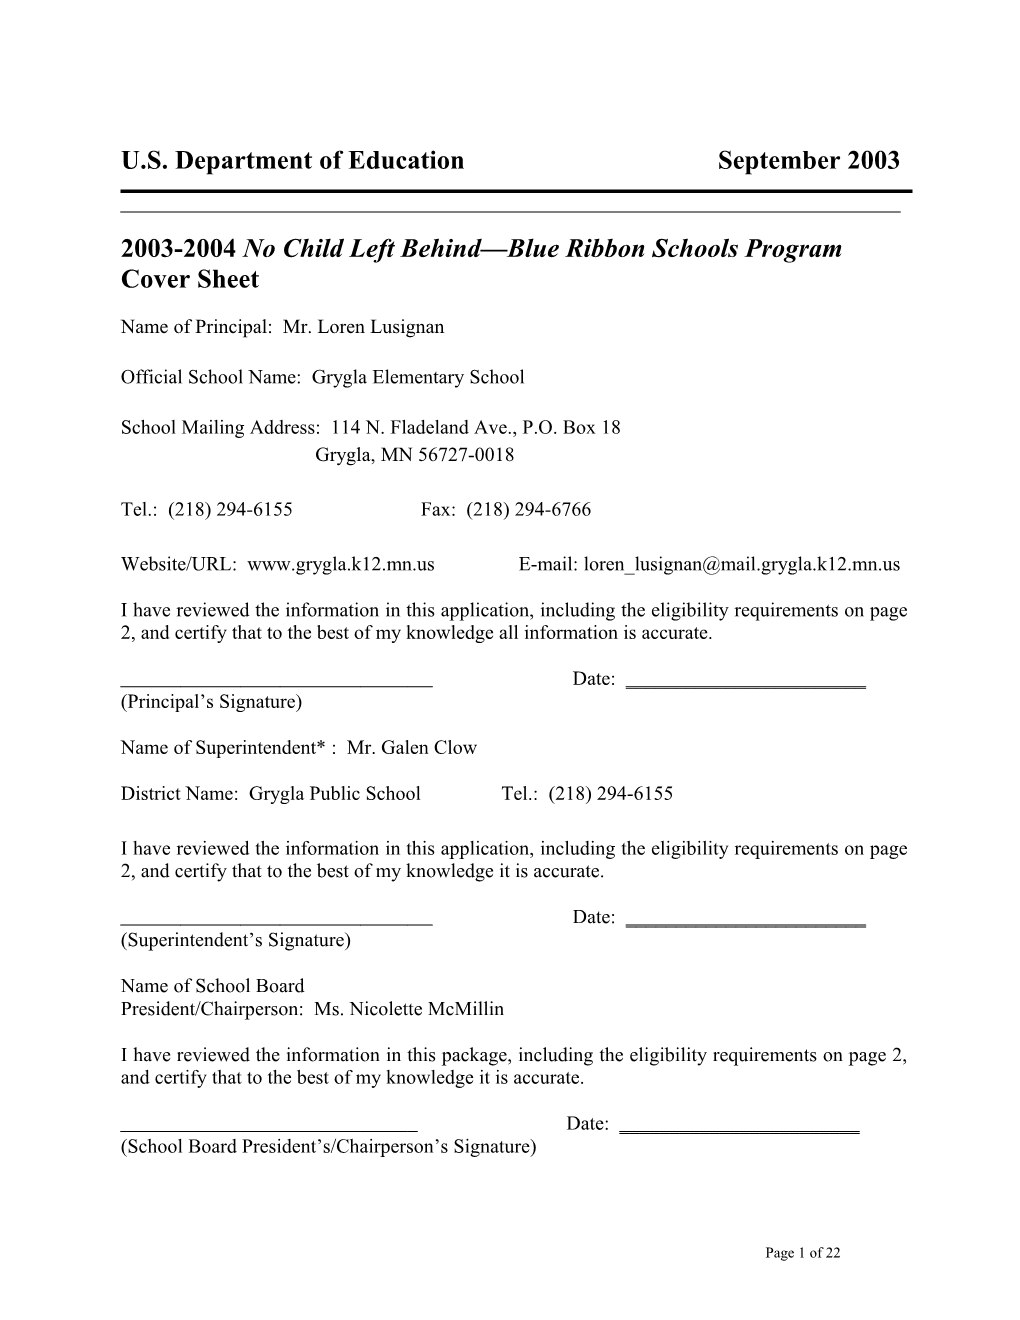 Grygla Elementary School 2004 No Child Left Behind-Blue Ribbon School Application (Msword)